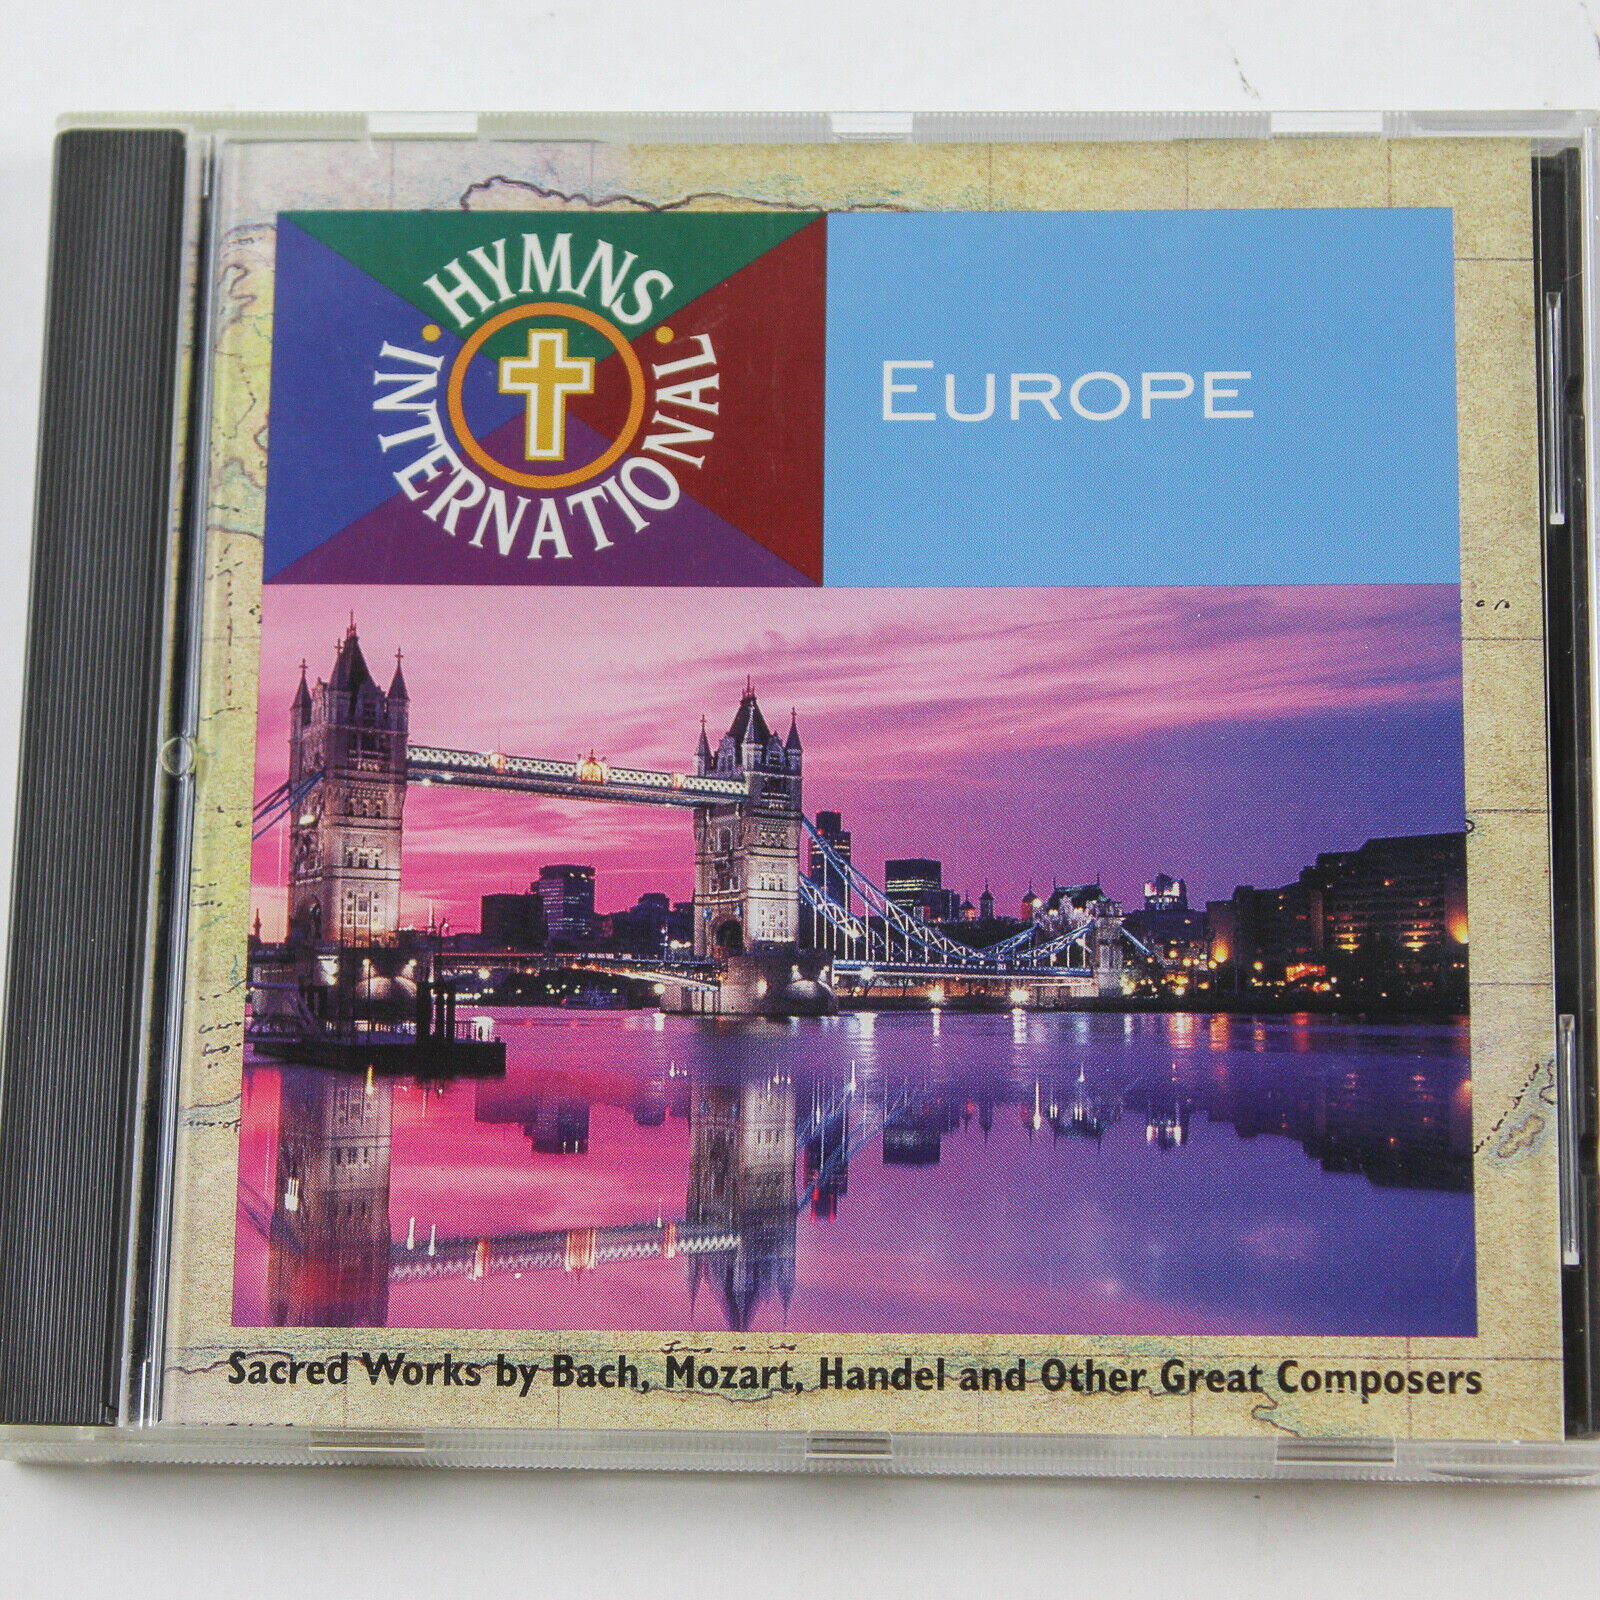 Hymns International Europe Audio Music CD Compact Disc 1993 Benson Music Group